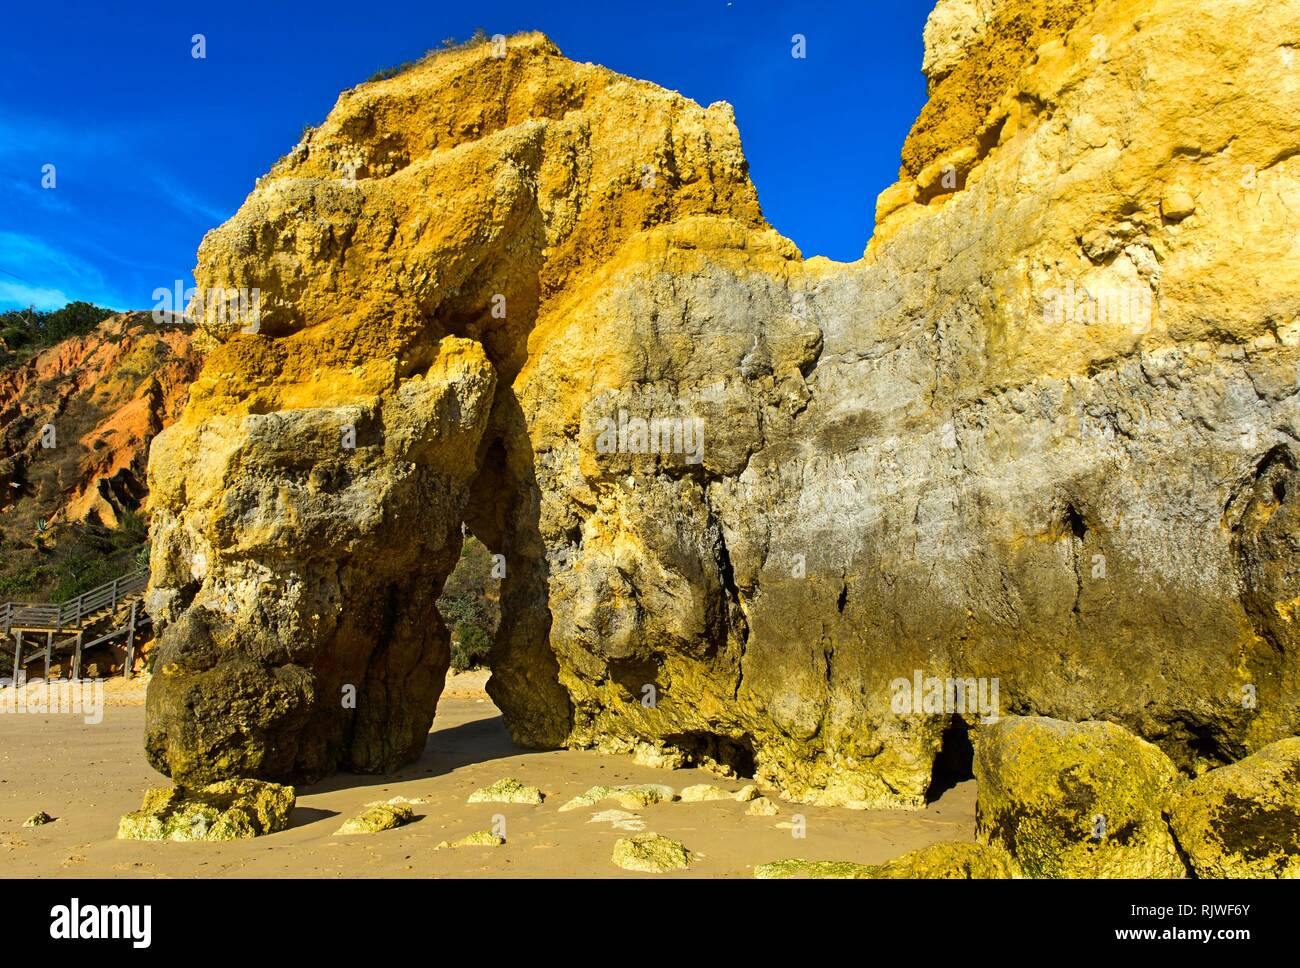 Ochre coloured rocks at Camilo Beach, Praia do Camilo, Lagos, Algarve, Portugal Stock Photo